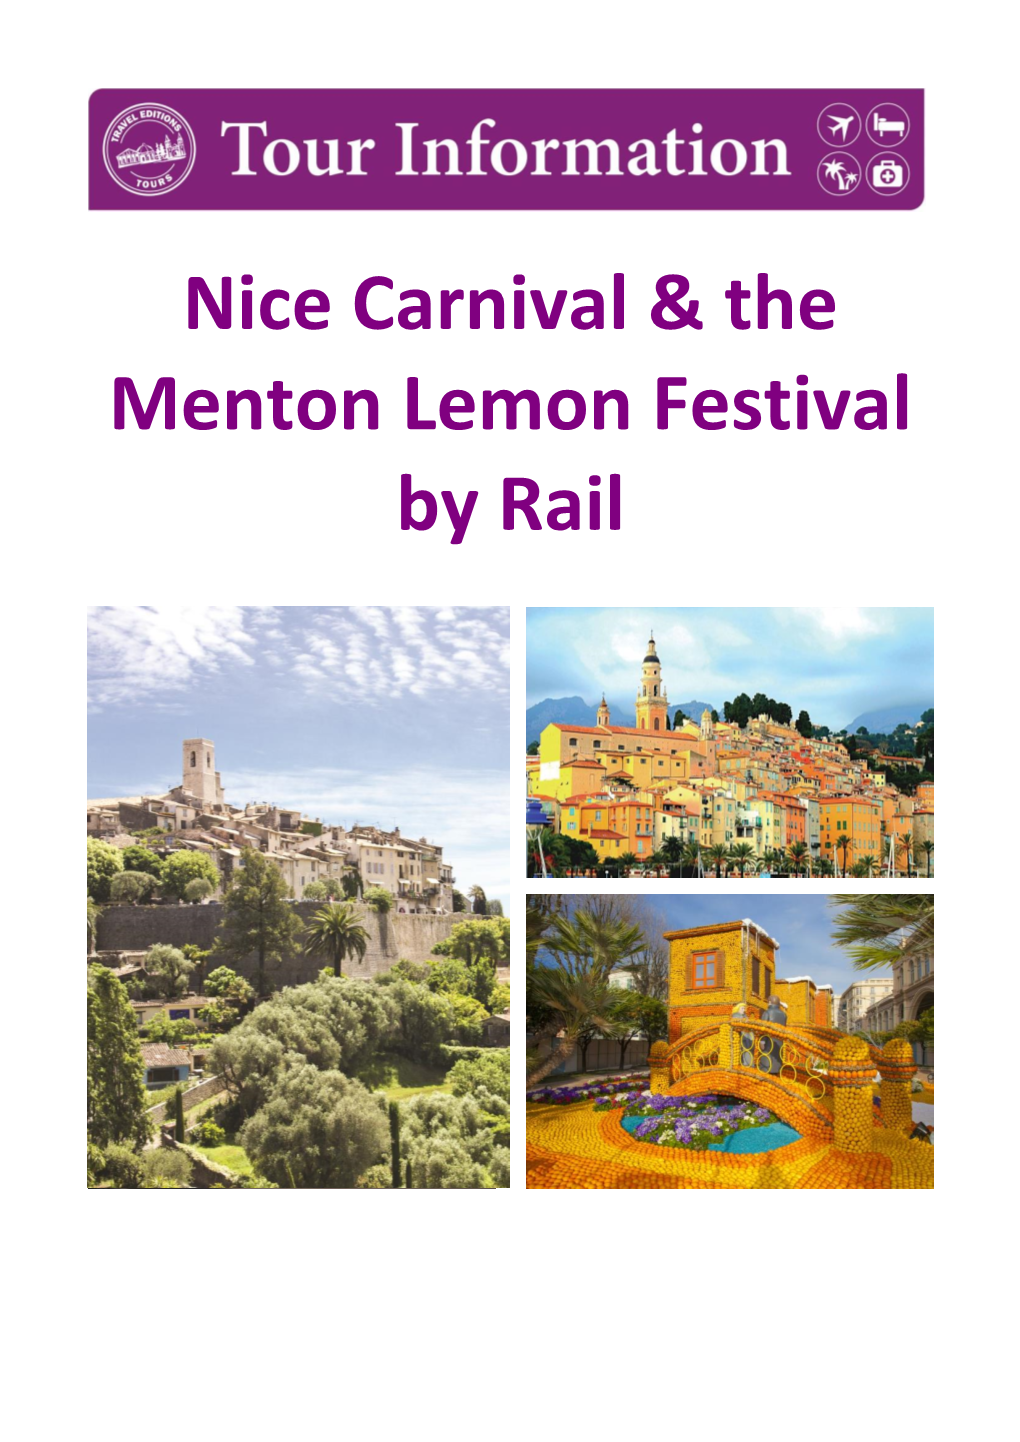 Nice Carnival & the Menton Lemon Festival by Rail